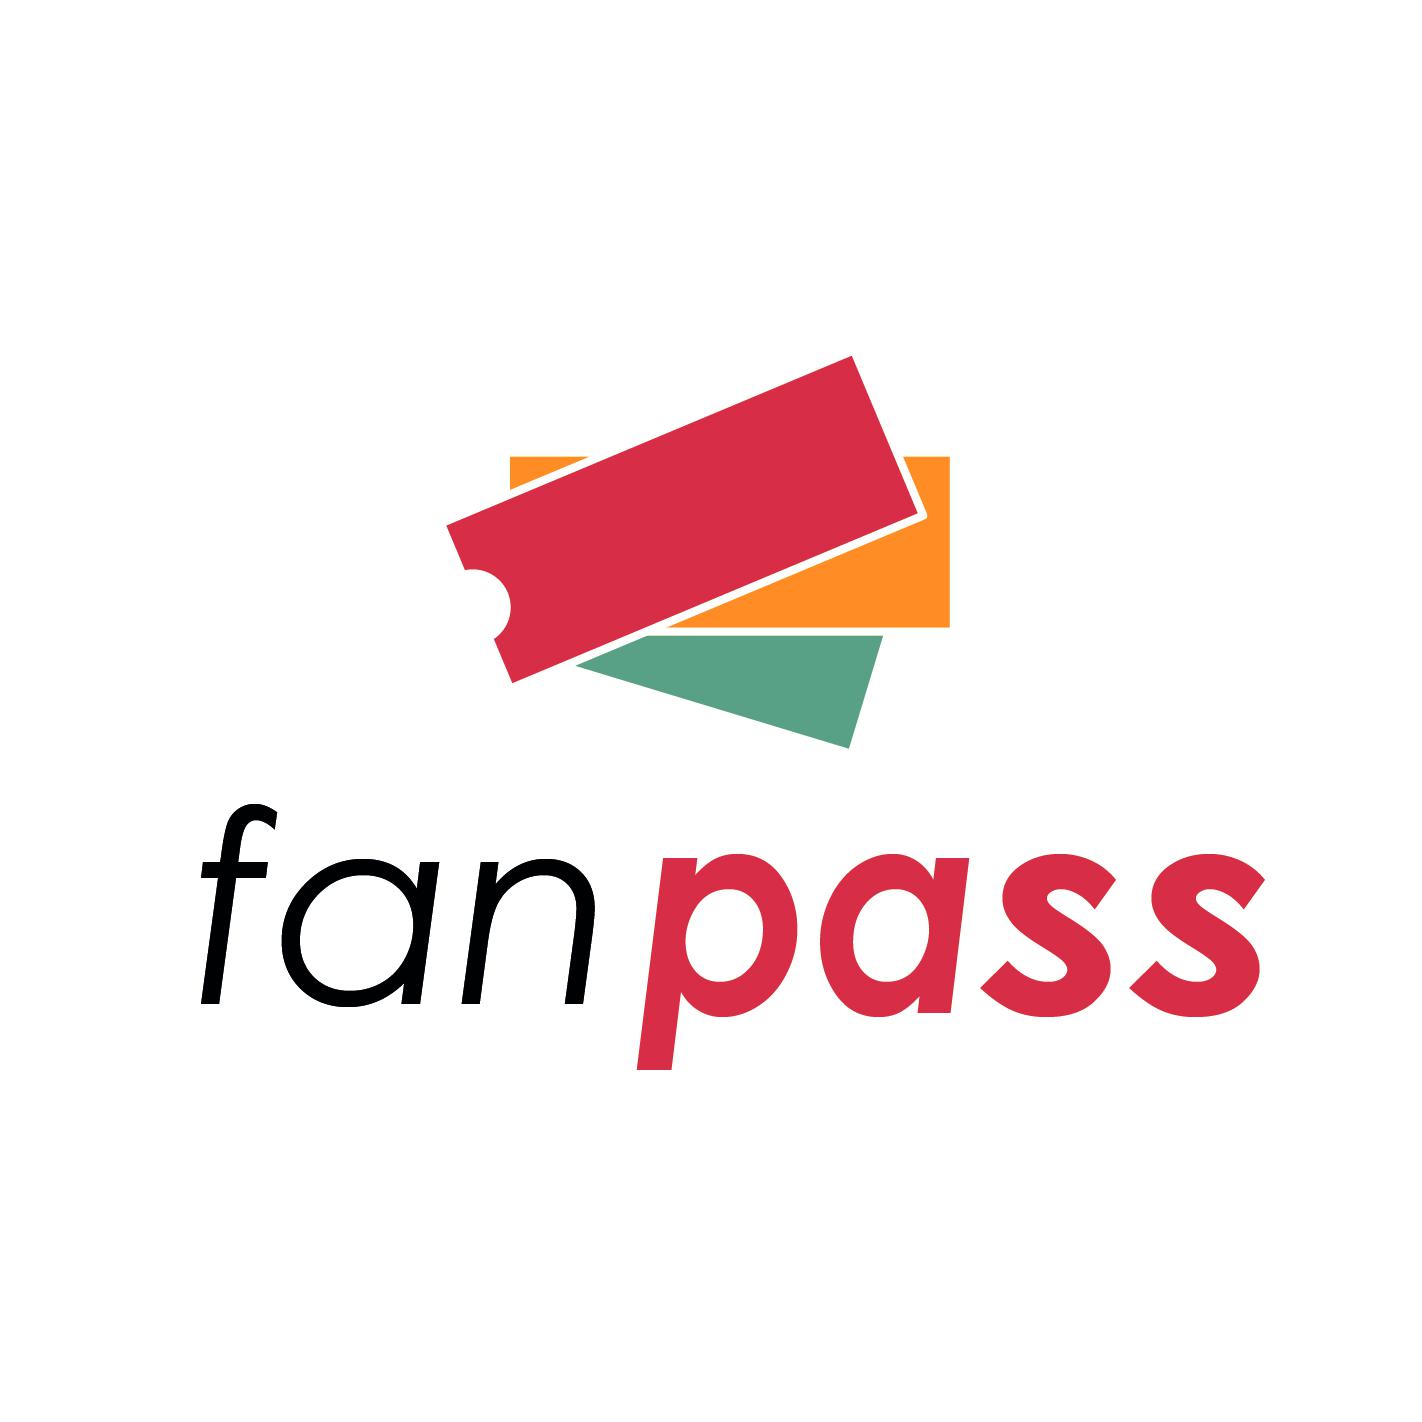 Fanpass